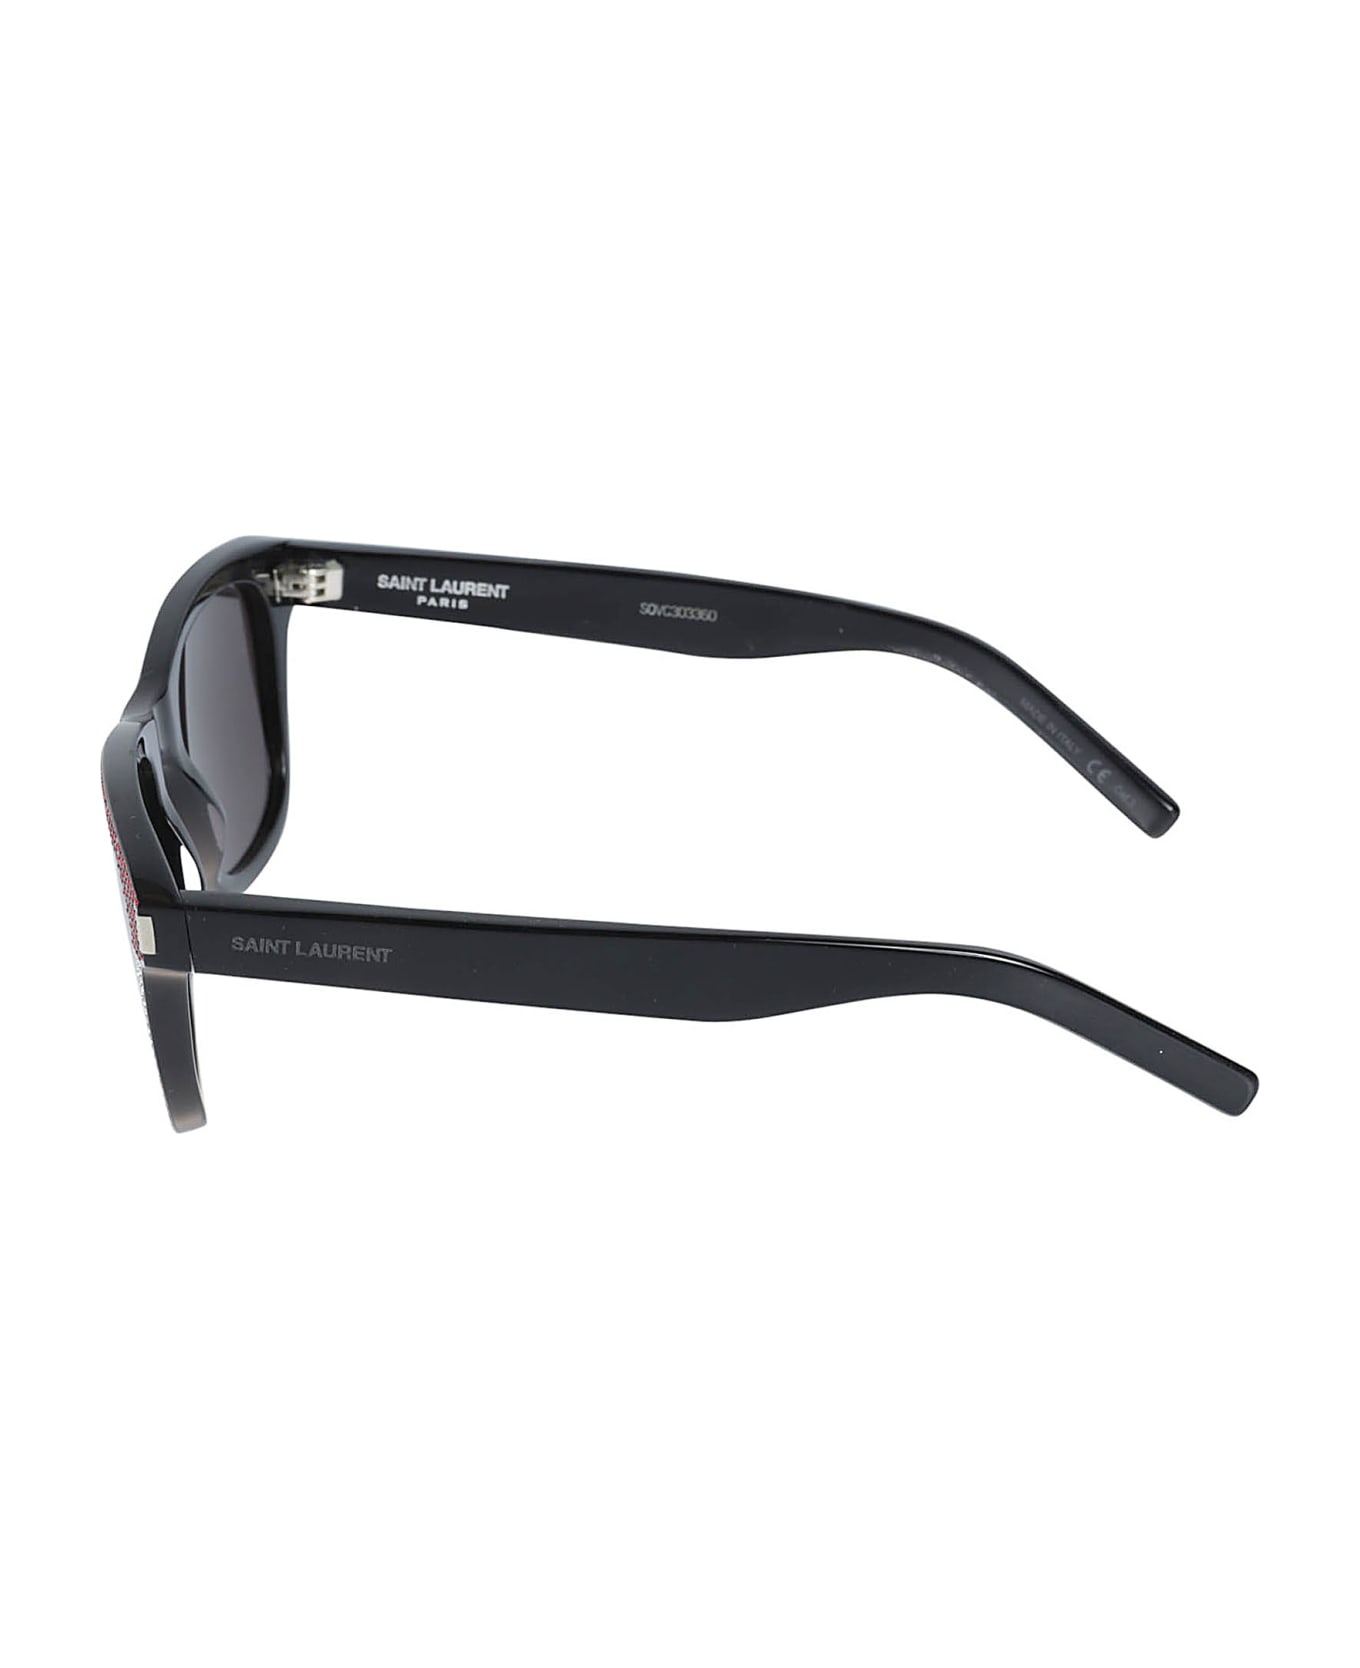 Saint Laurent Eyewear Square Frame Studded Sunglasses western - Black/Grey